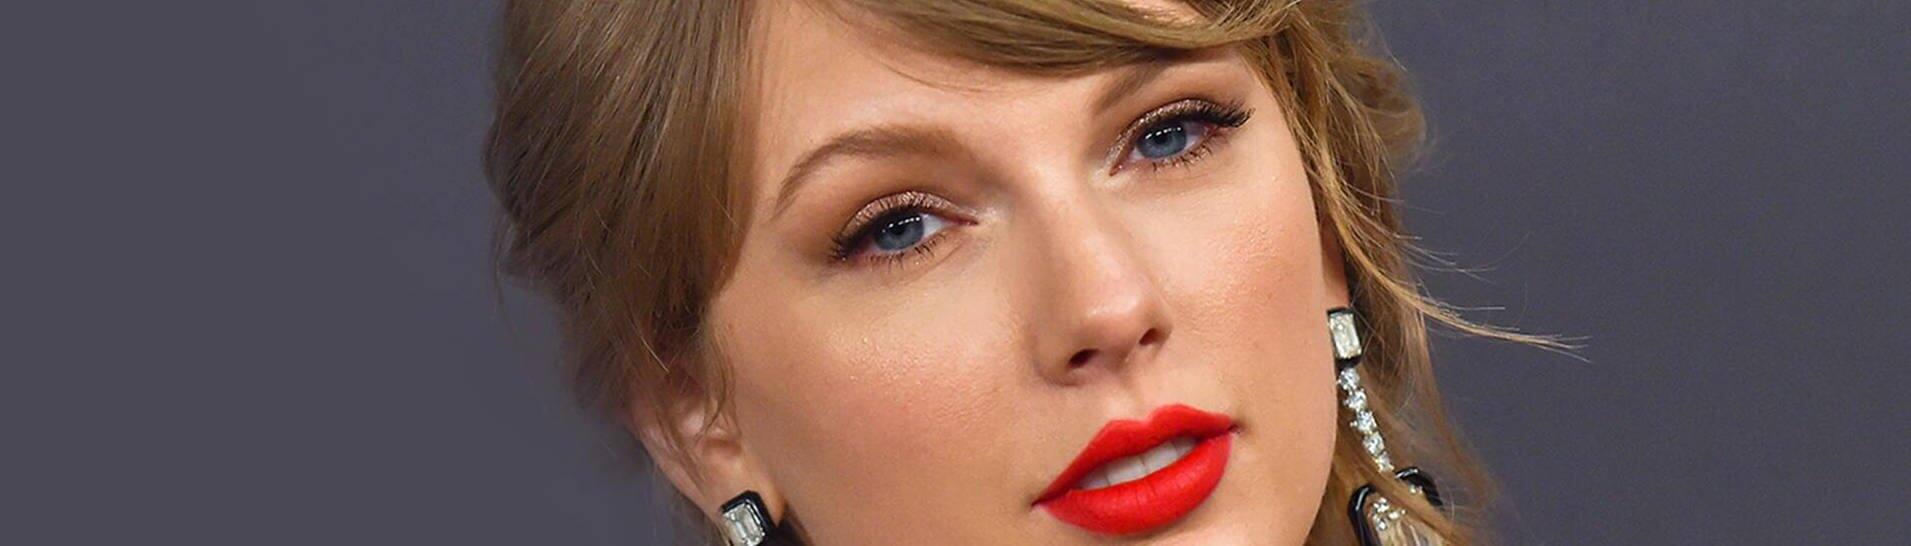 Taylor Swift (Foto: imago/Runway Manhatten)